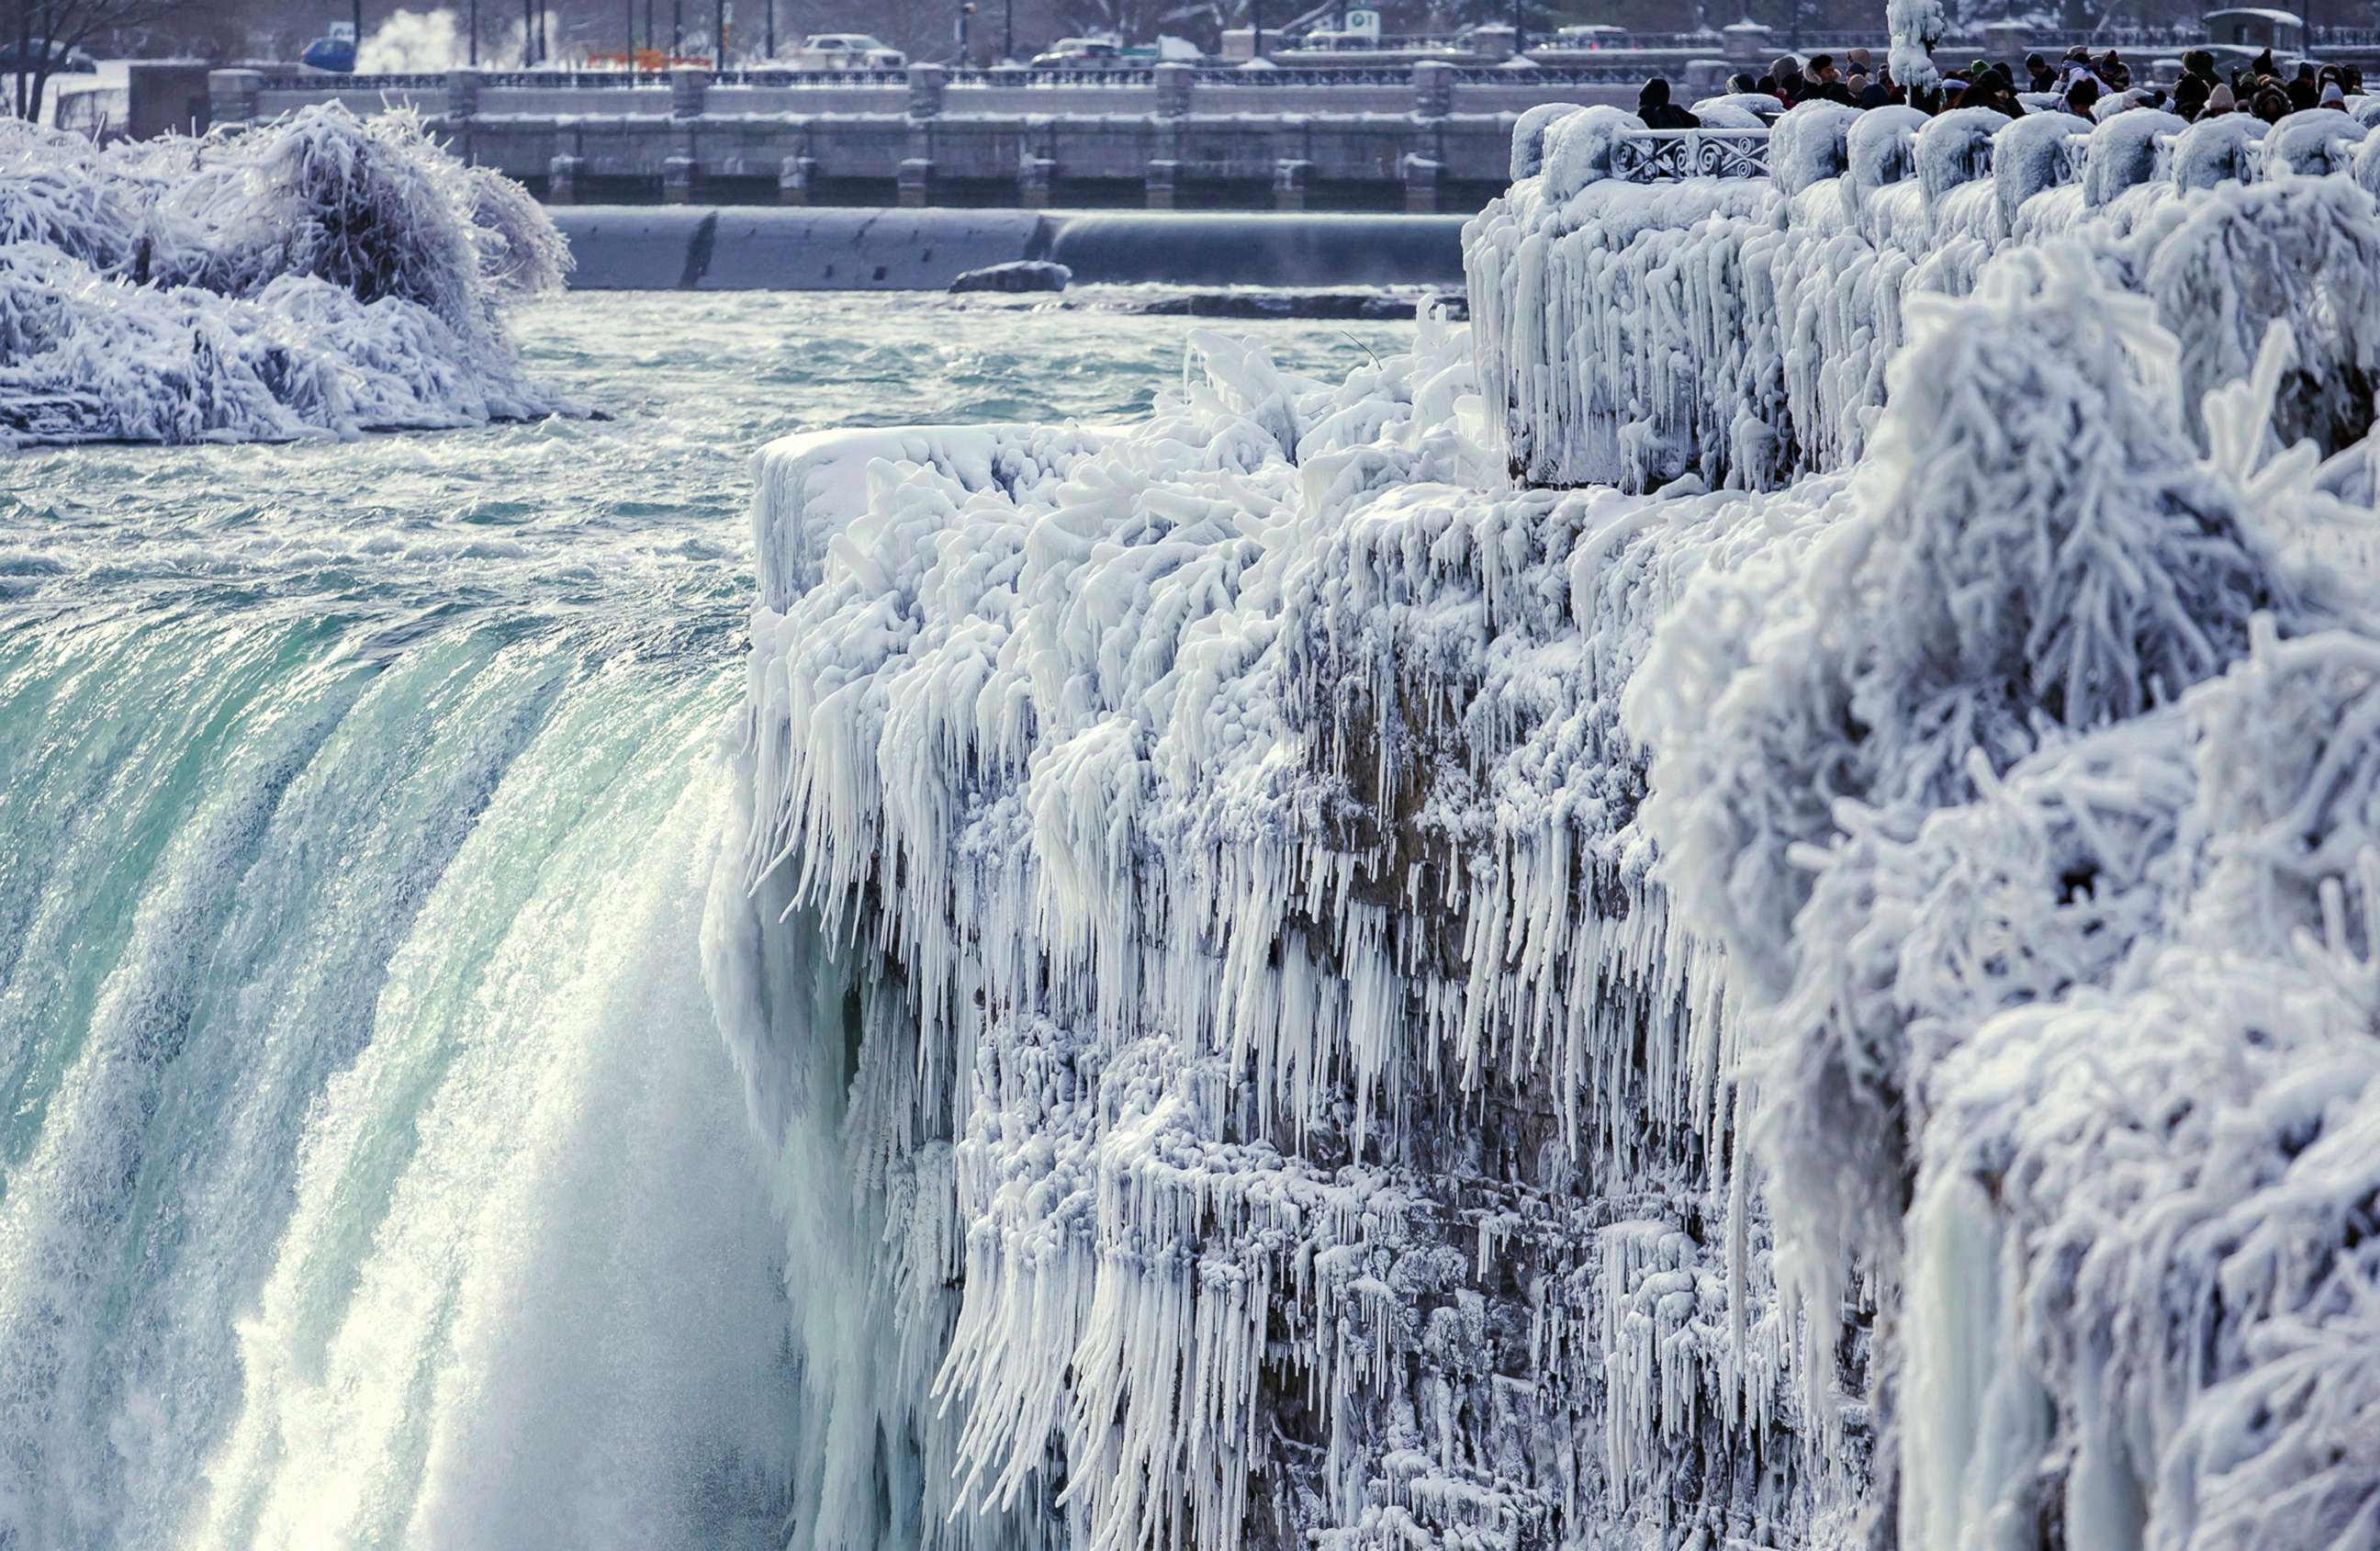 PHOTO: Visitors take photographs at the brink of the Horseshoe Falls in Niagara Falls, Ontario, Dec. 29, 2017.